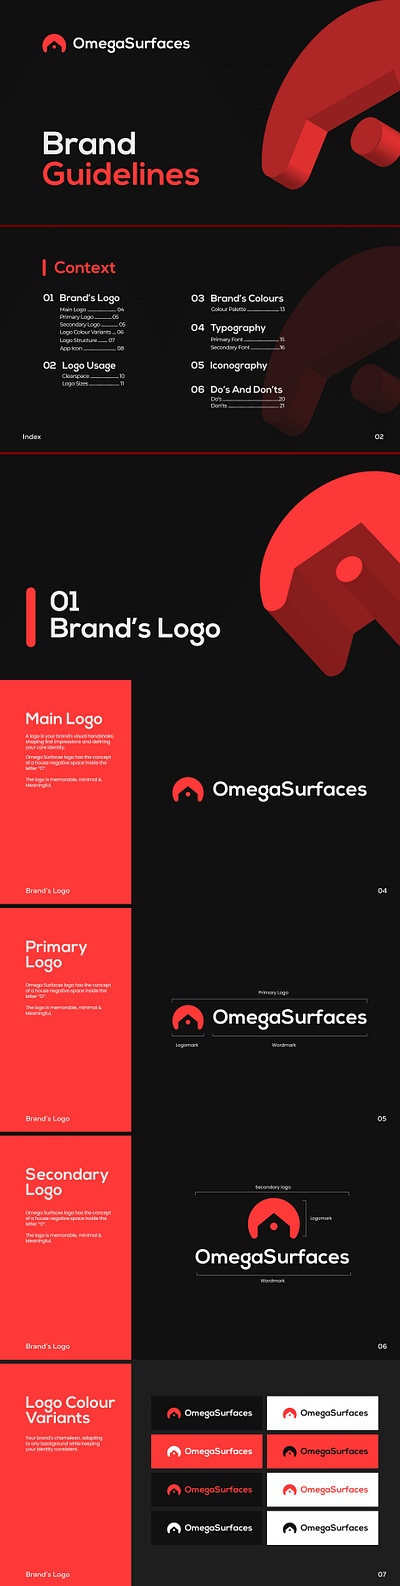 Omega Surfaces - Brand Guidelines brand guidelines branding design graphic design logo vector